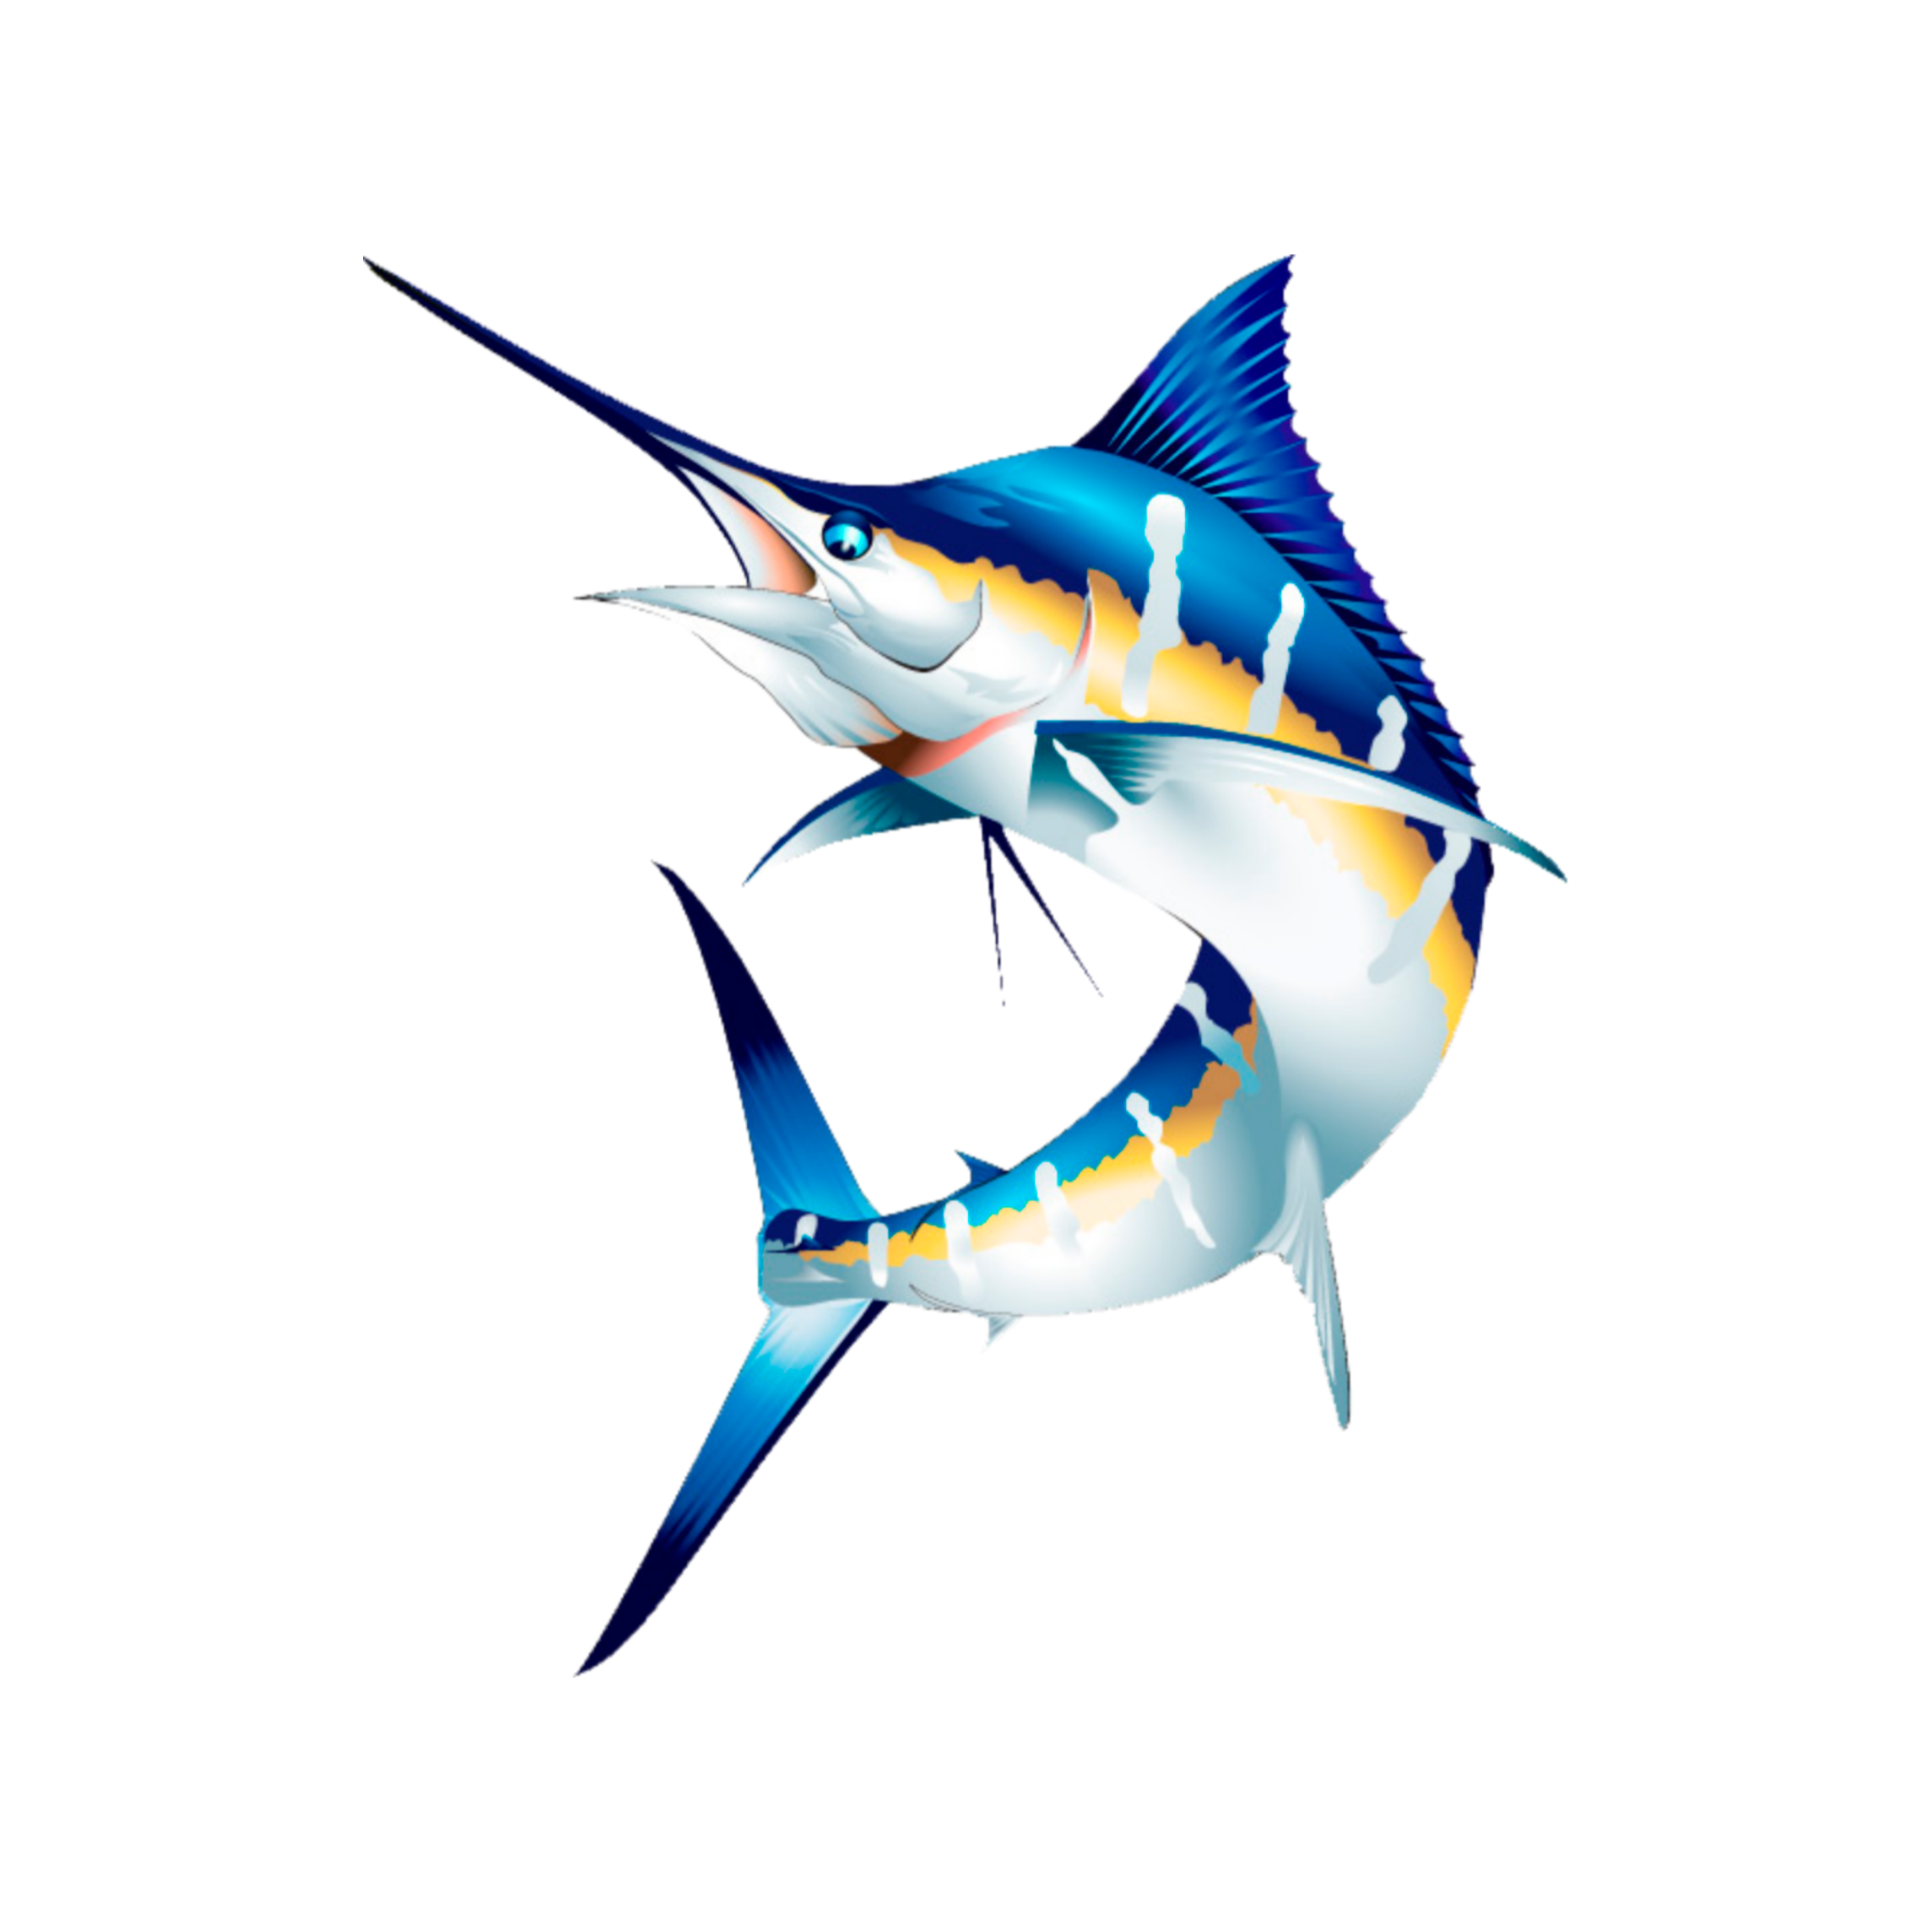 Парусник рыба Марлин. Голубой Марлин рыба. Рыба меч и Марлин. Атлантический голубой Марлин. Рыба меч детям